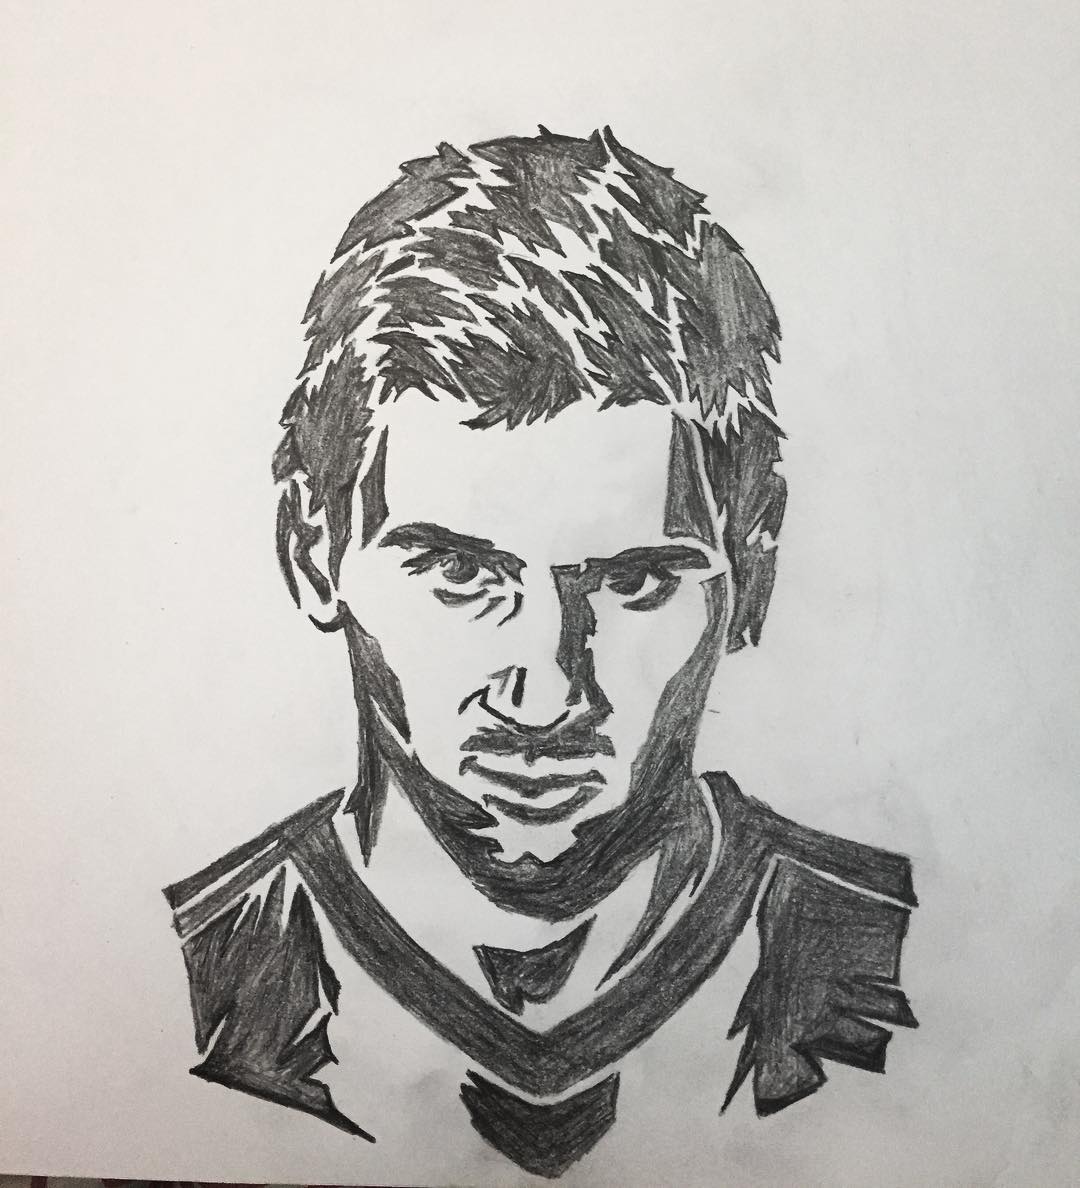 A Lionel Messi sketch